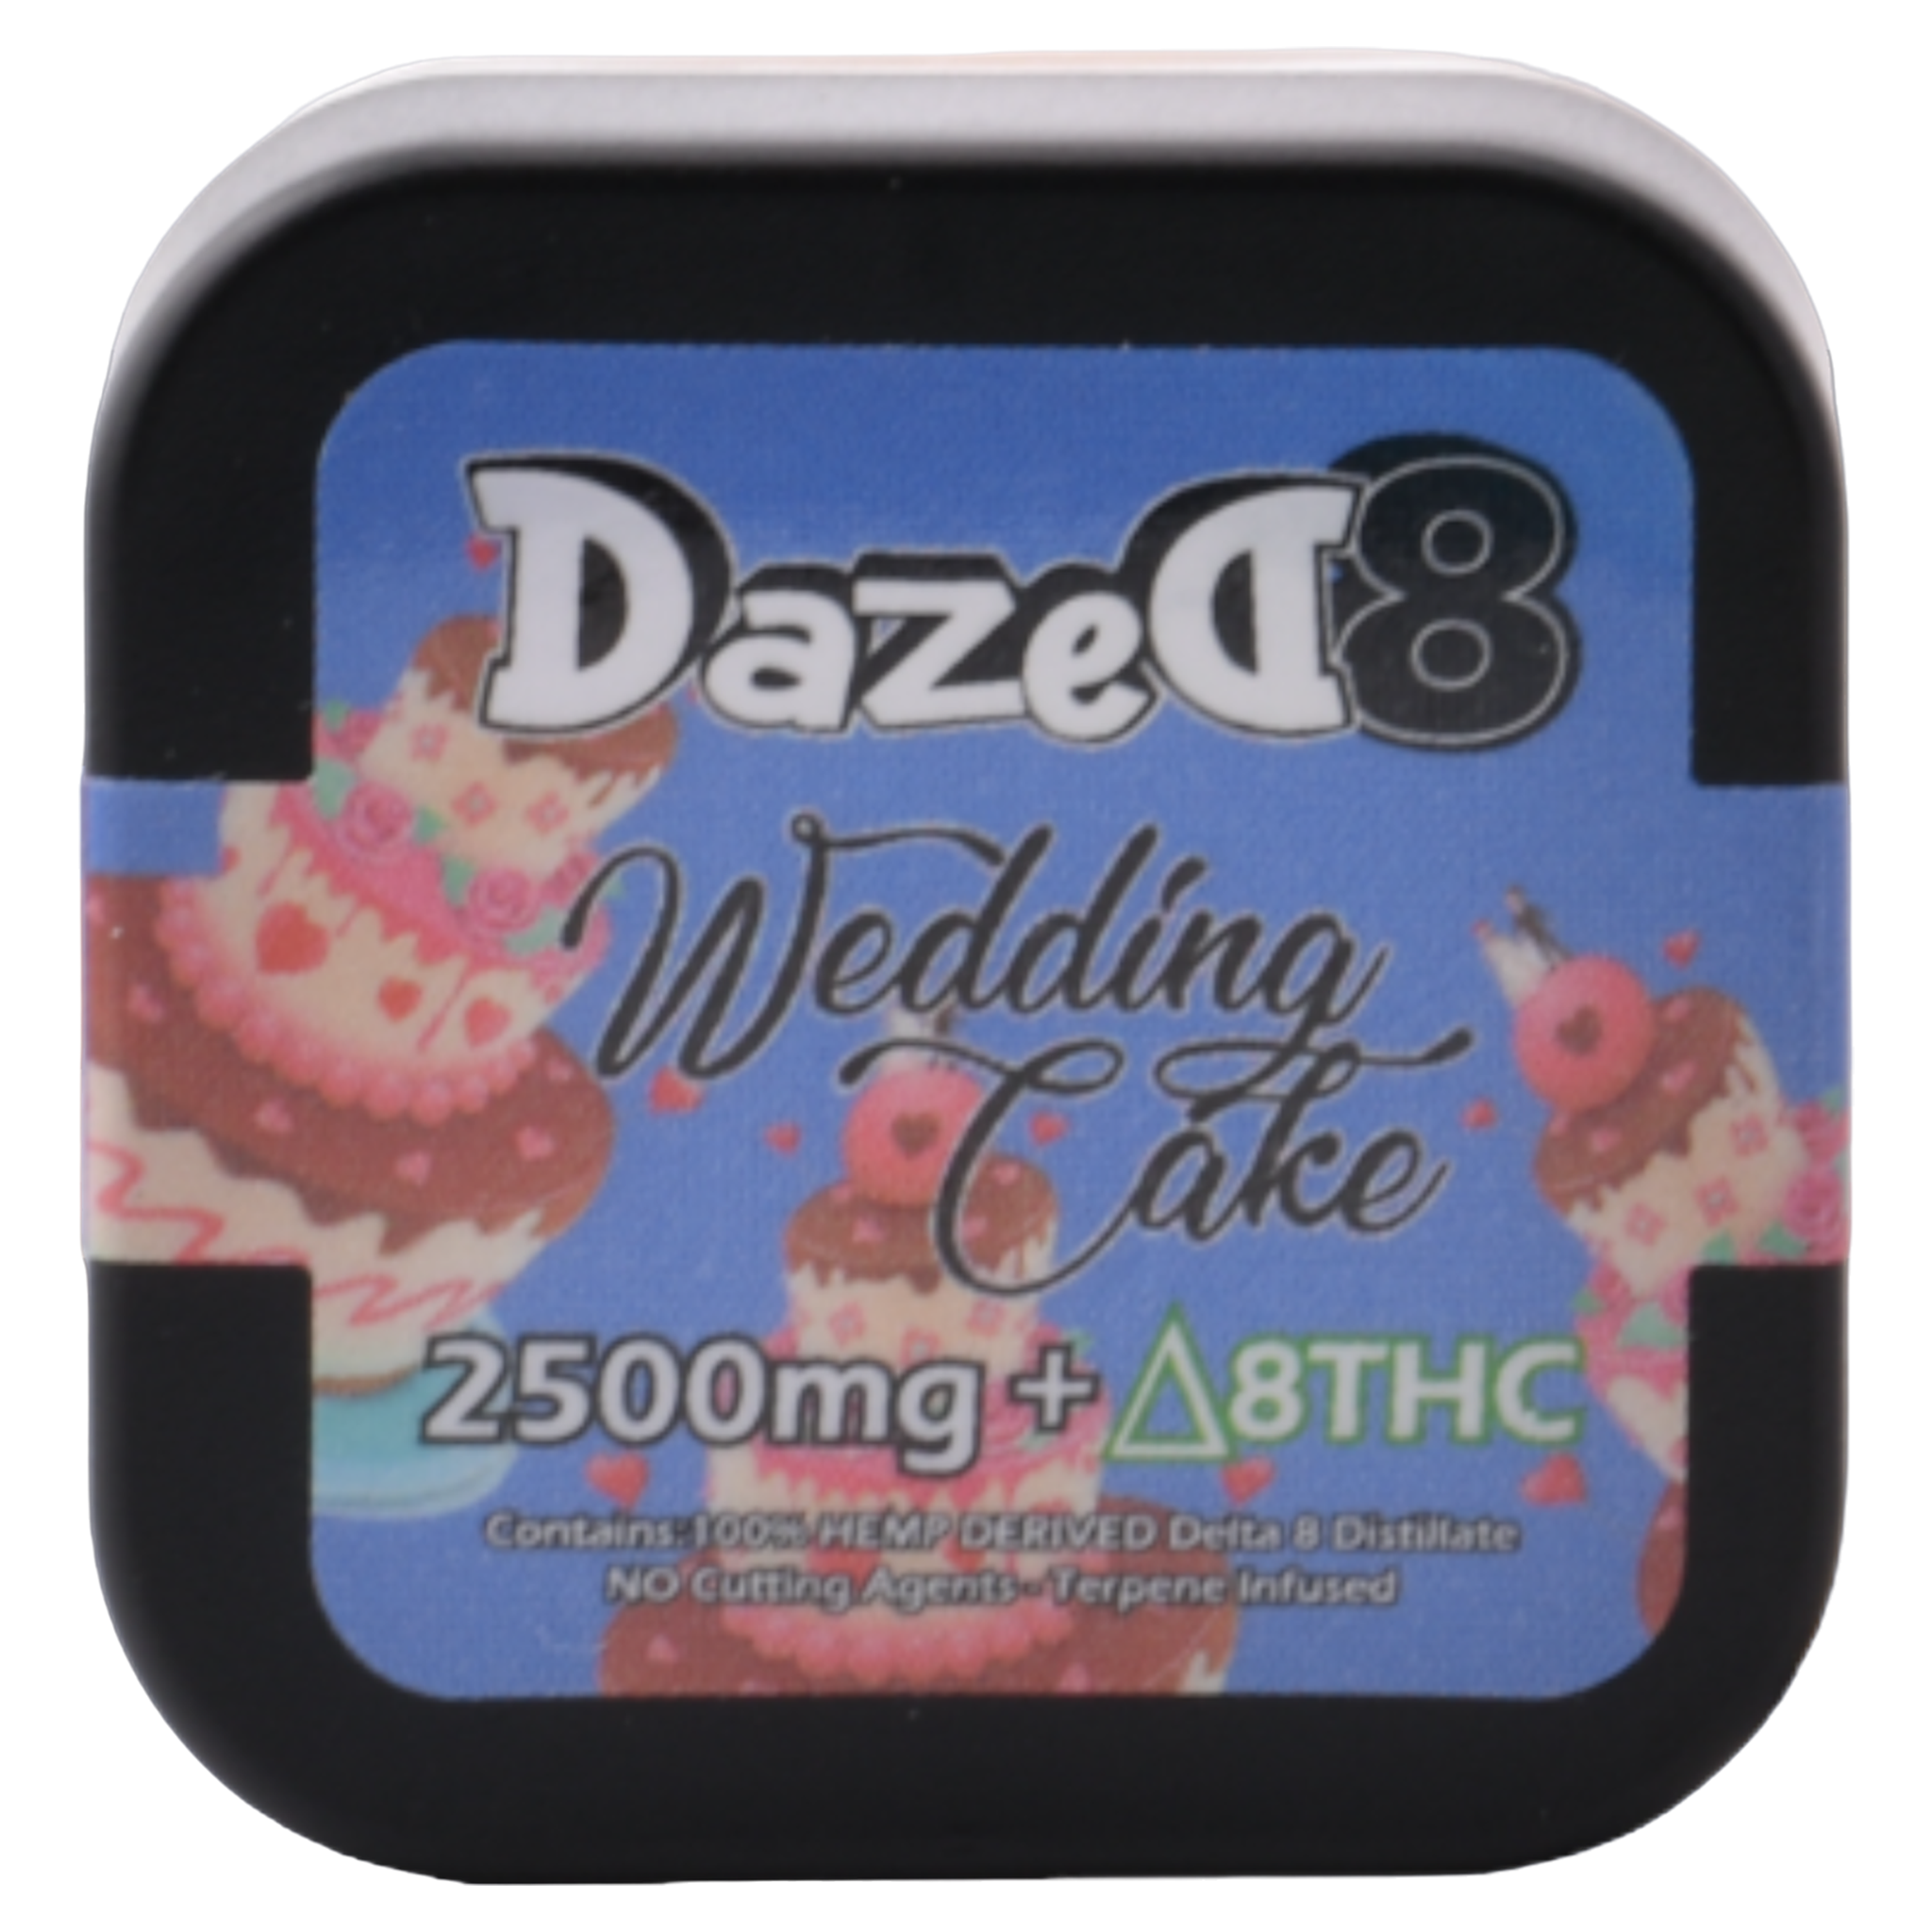 Wedding Cake Delta 8 Dab [2.5G]